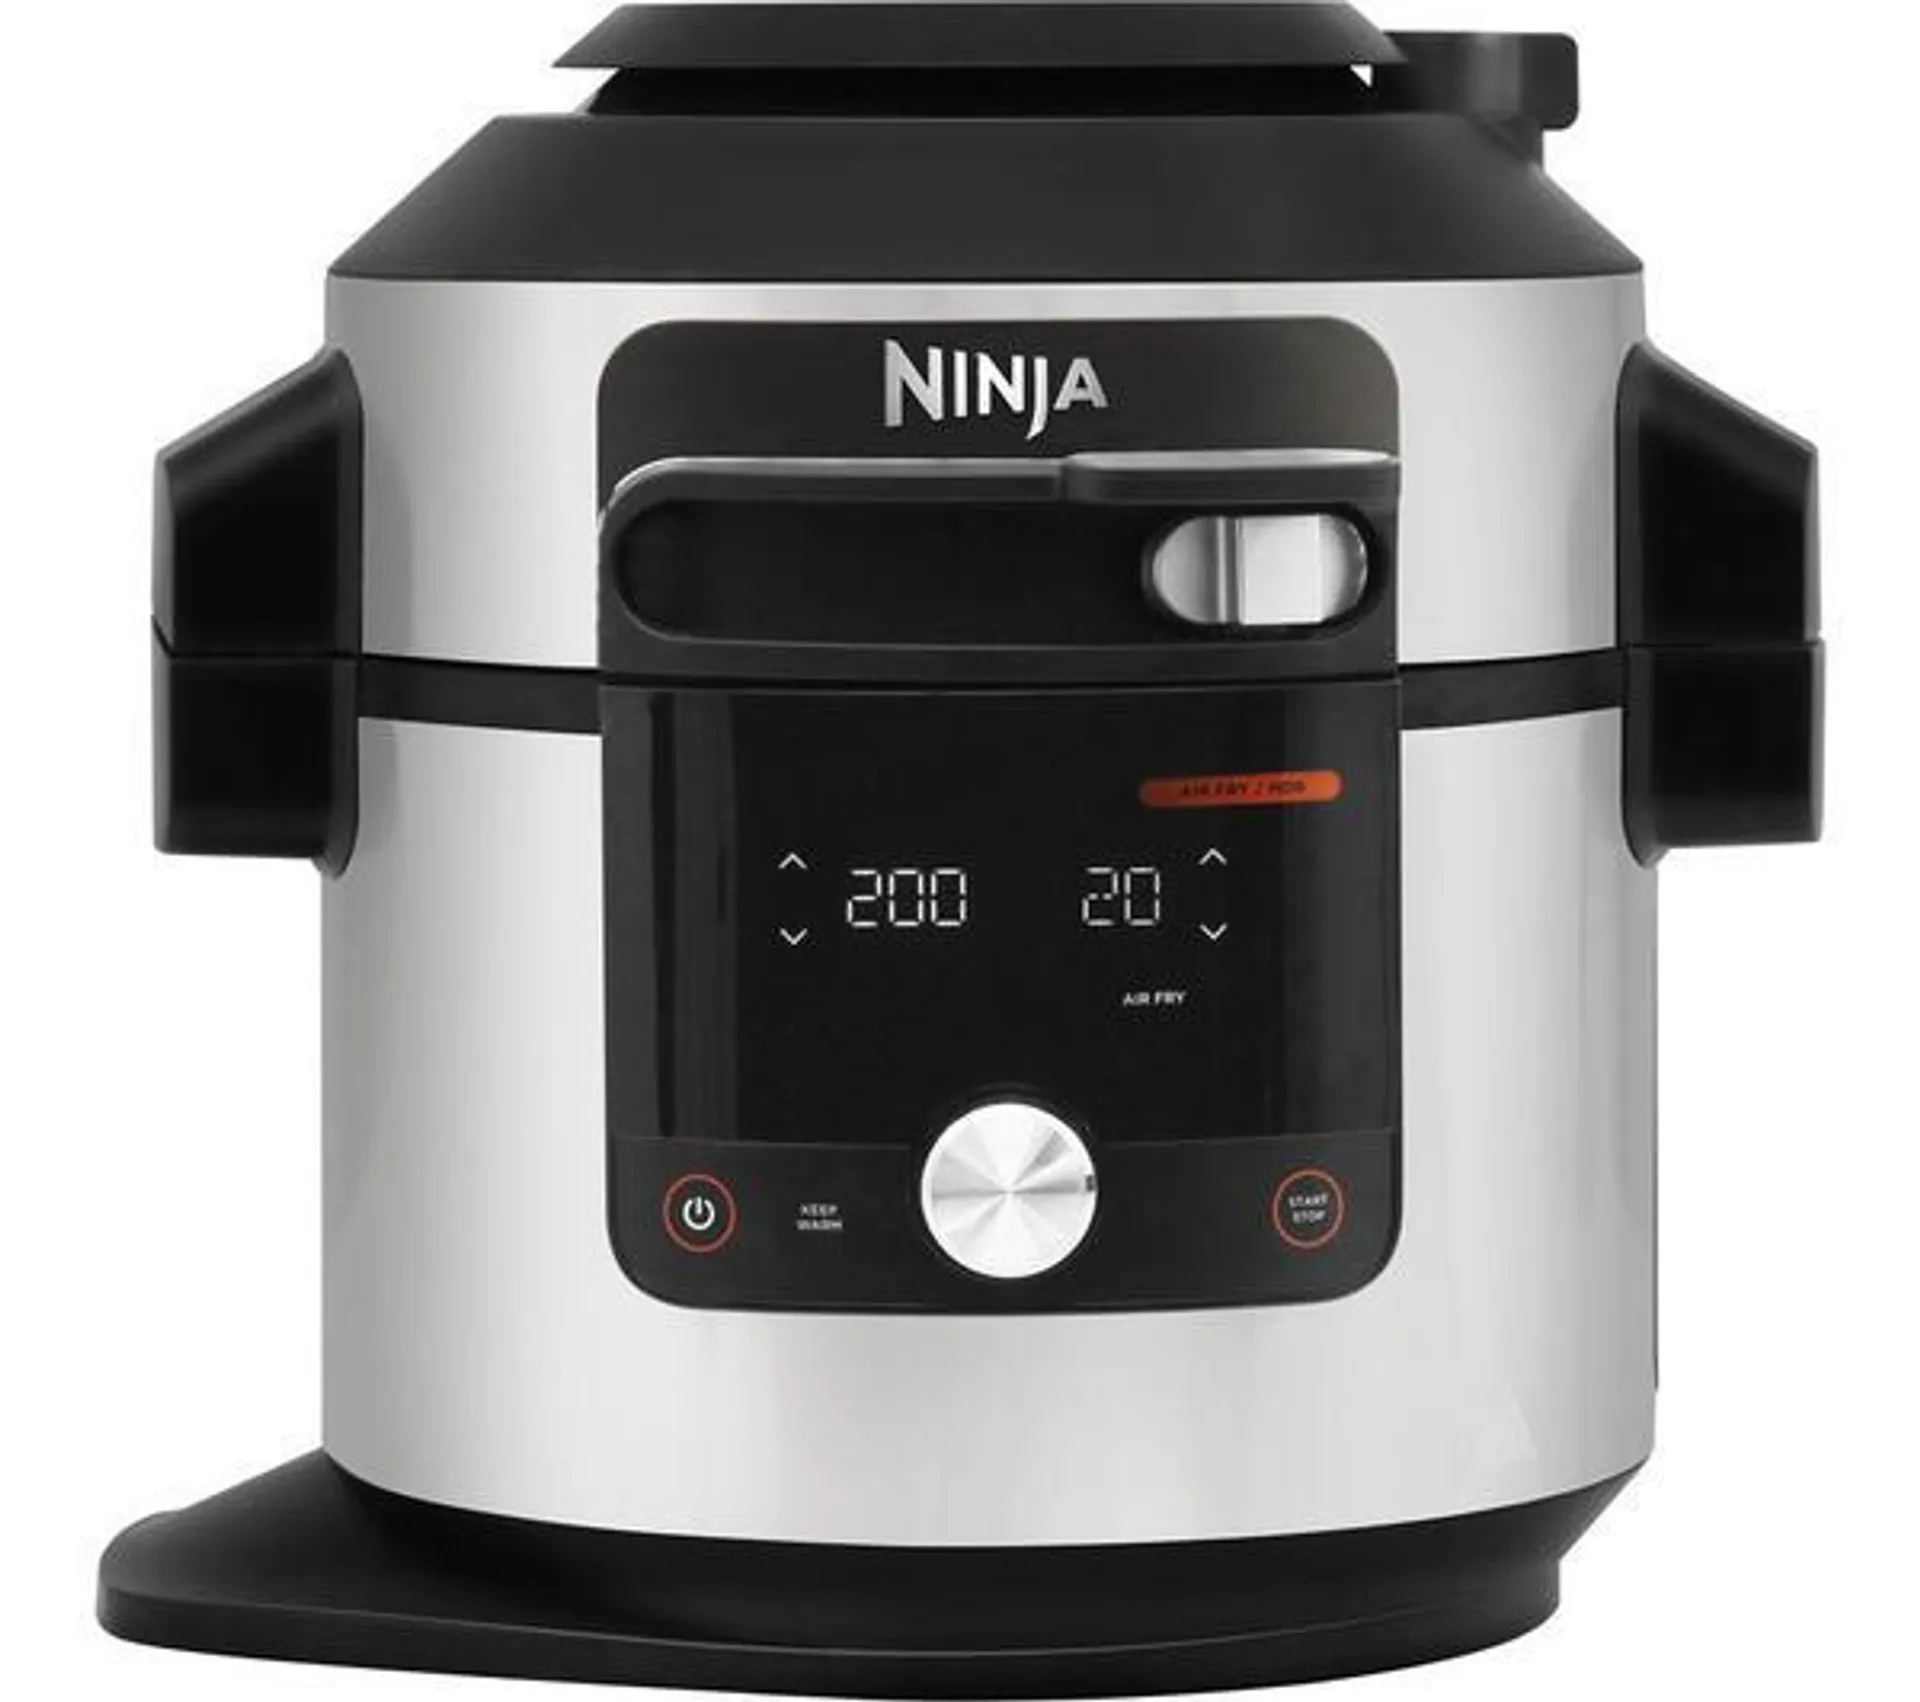 NINJA Foodi MAX 15-in-1 SmartLid OL750UK Multicooker - Stainless Steel & Black